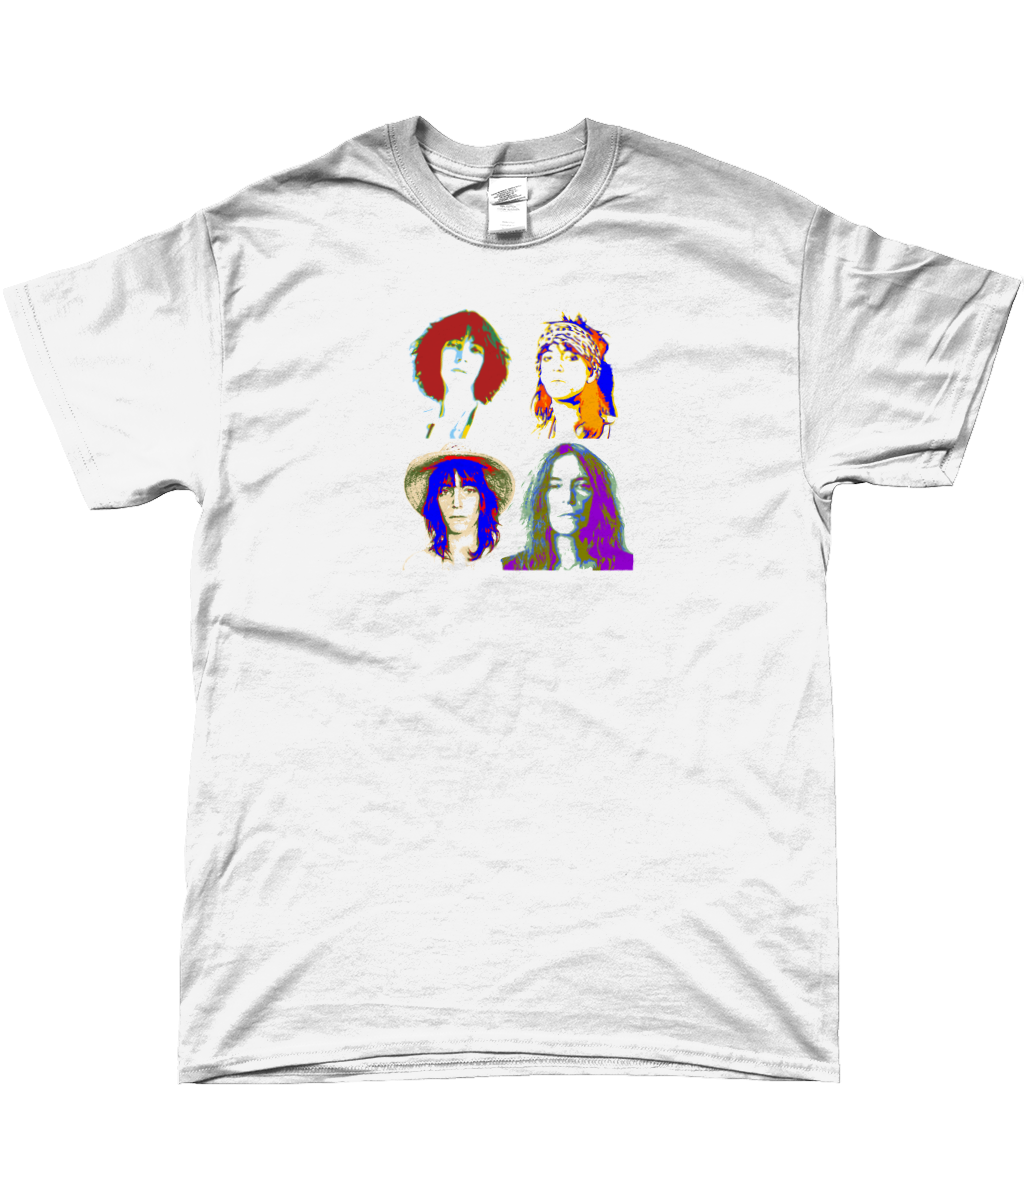 Patti Smith t-shirt